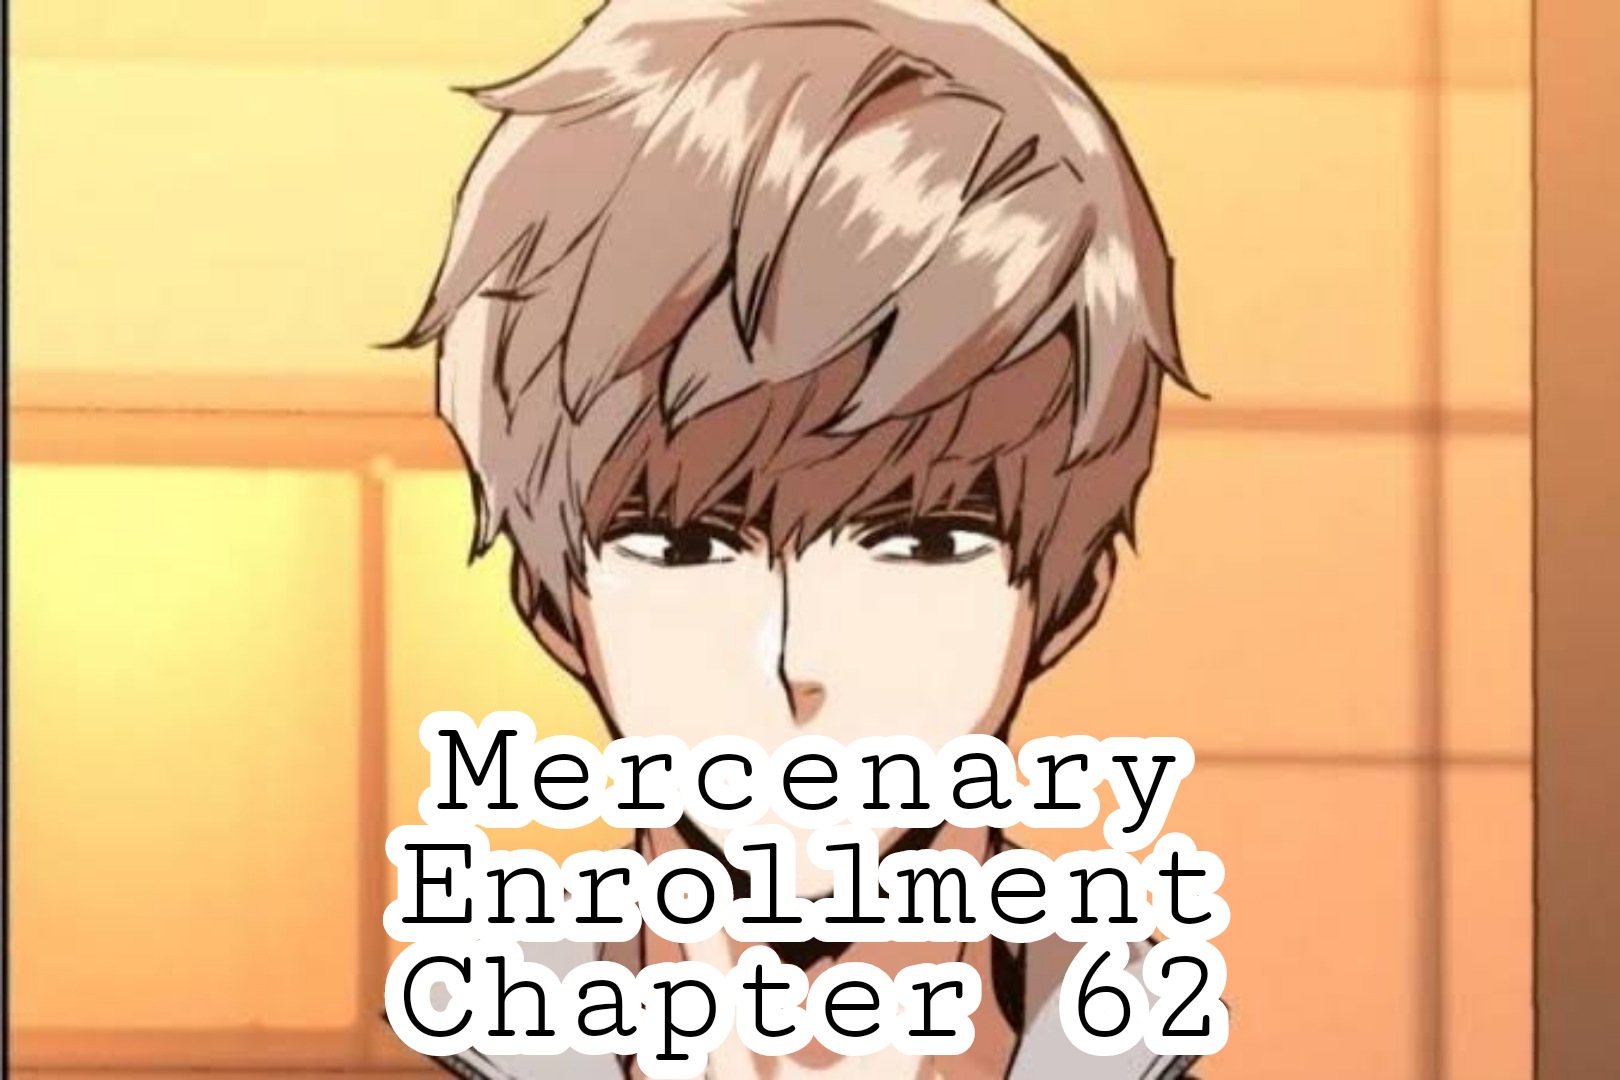 Манга прирожденный наемник 180. Mercenary Enrollment. Mercenary Enrollment Manga. Манхва Mercenary Enrollment. Mercenary Enrollment pls like and Subscribe.